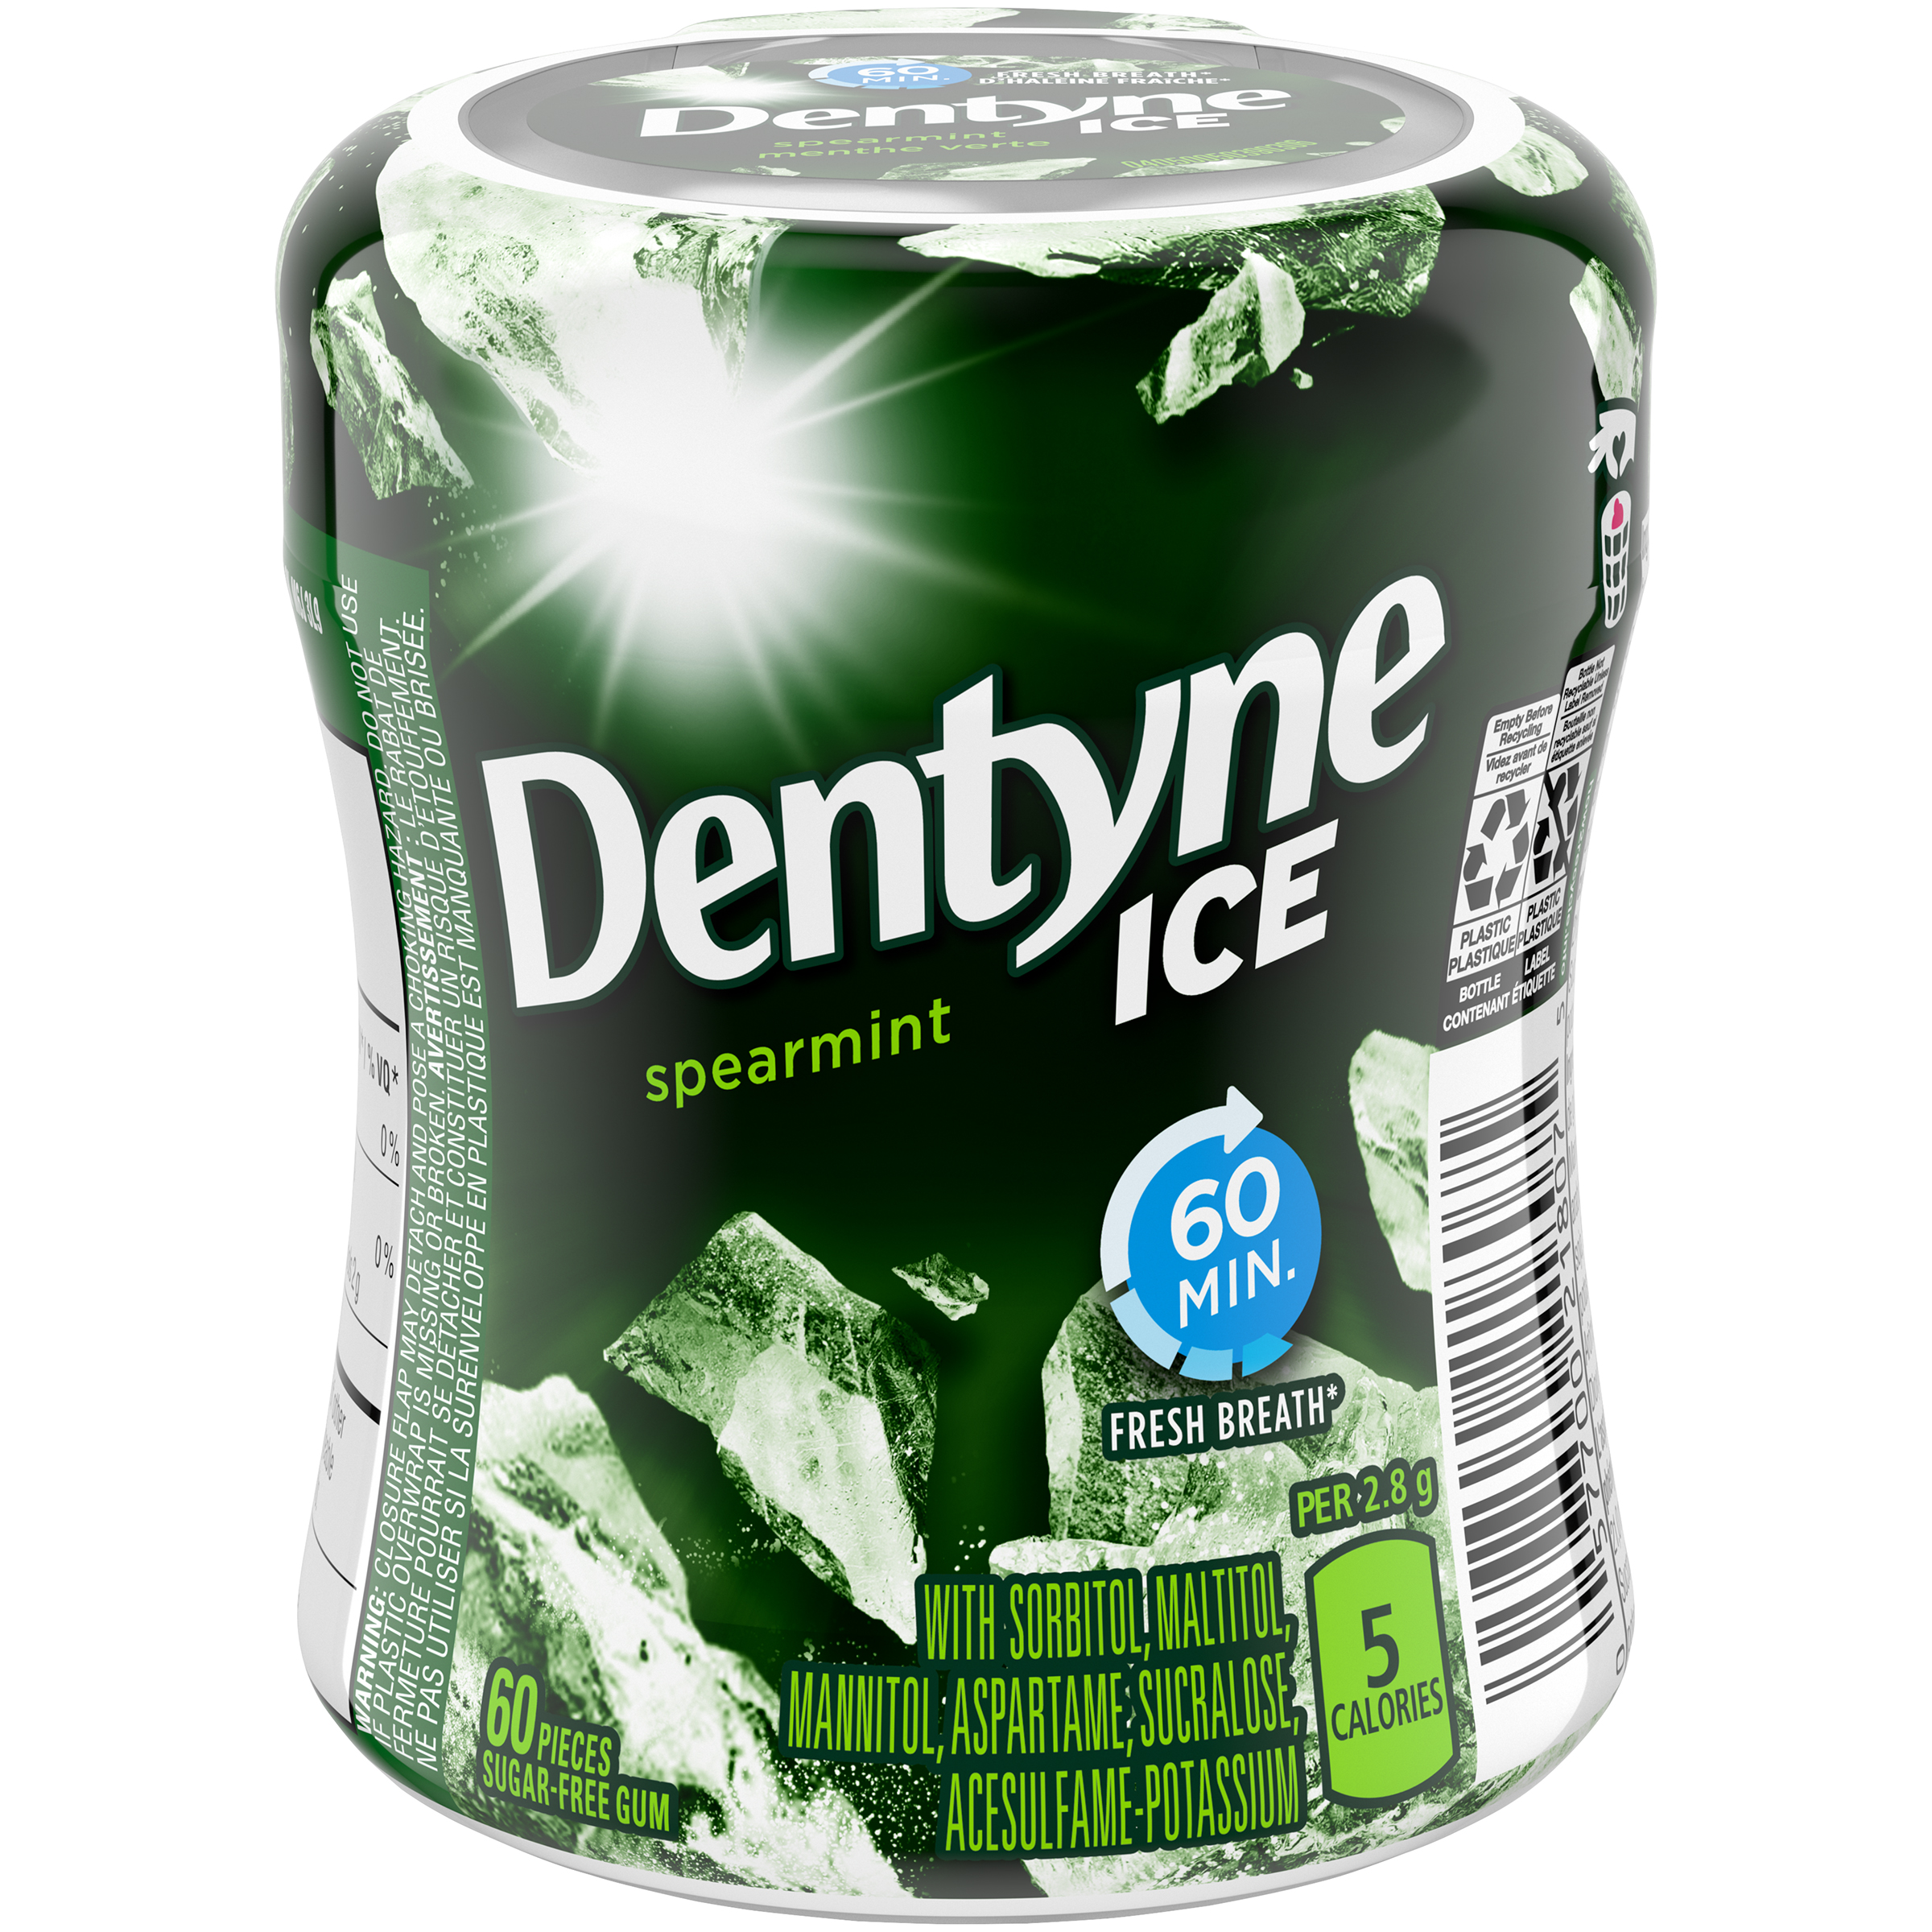 Dentyne Ice Spearmint Gum 60 Count